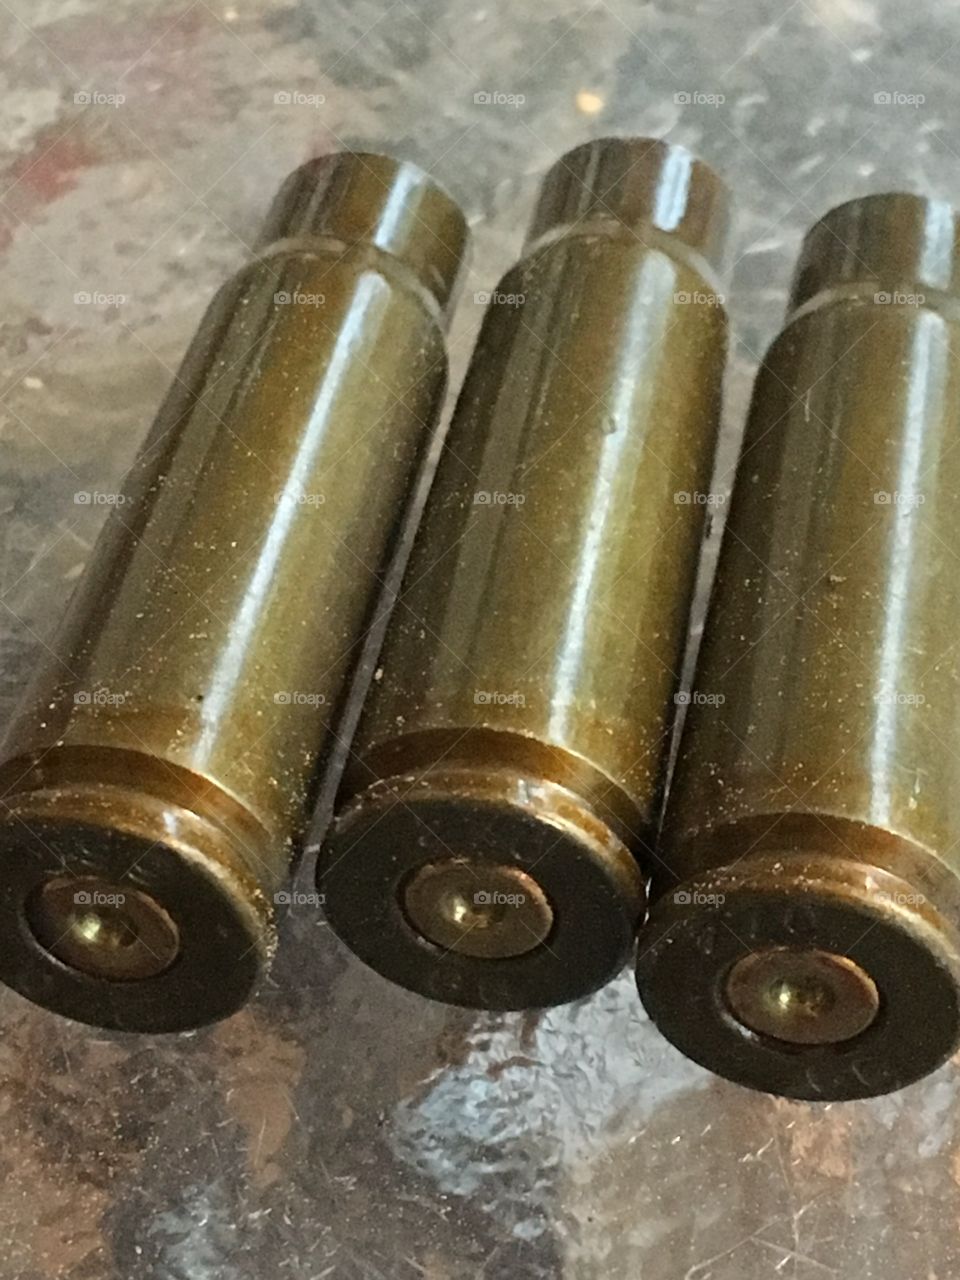 3 empty bullets